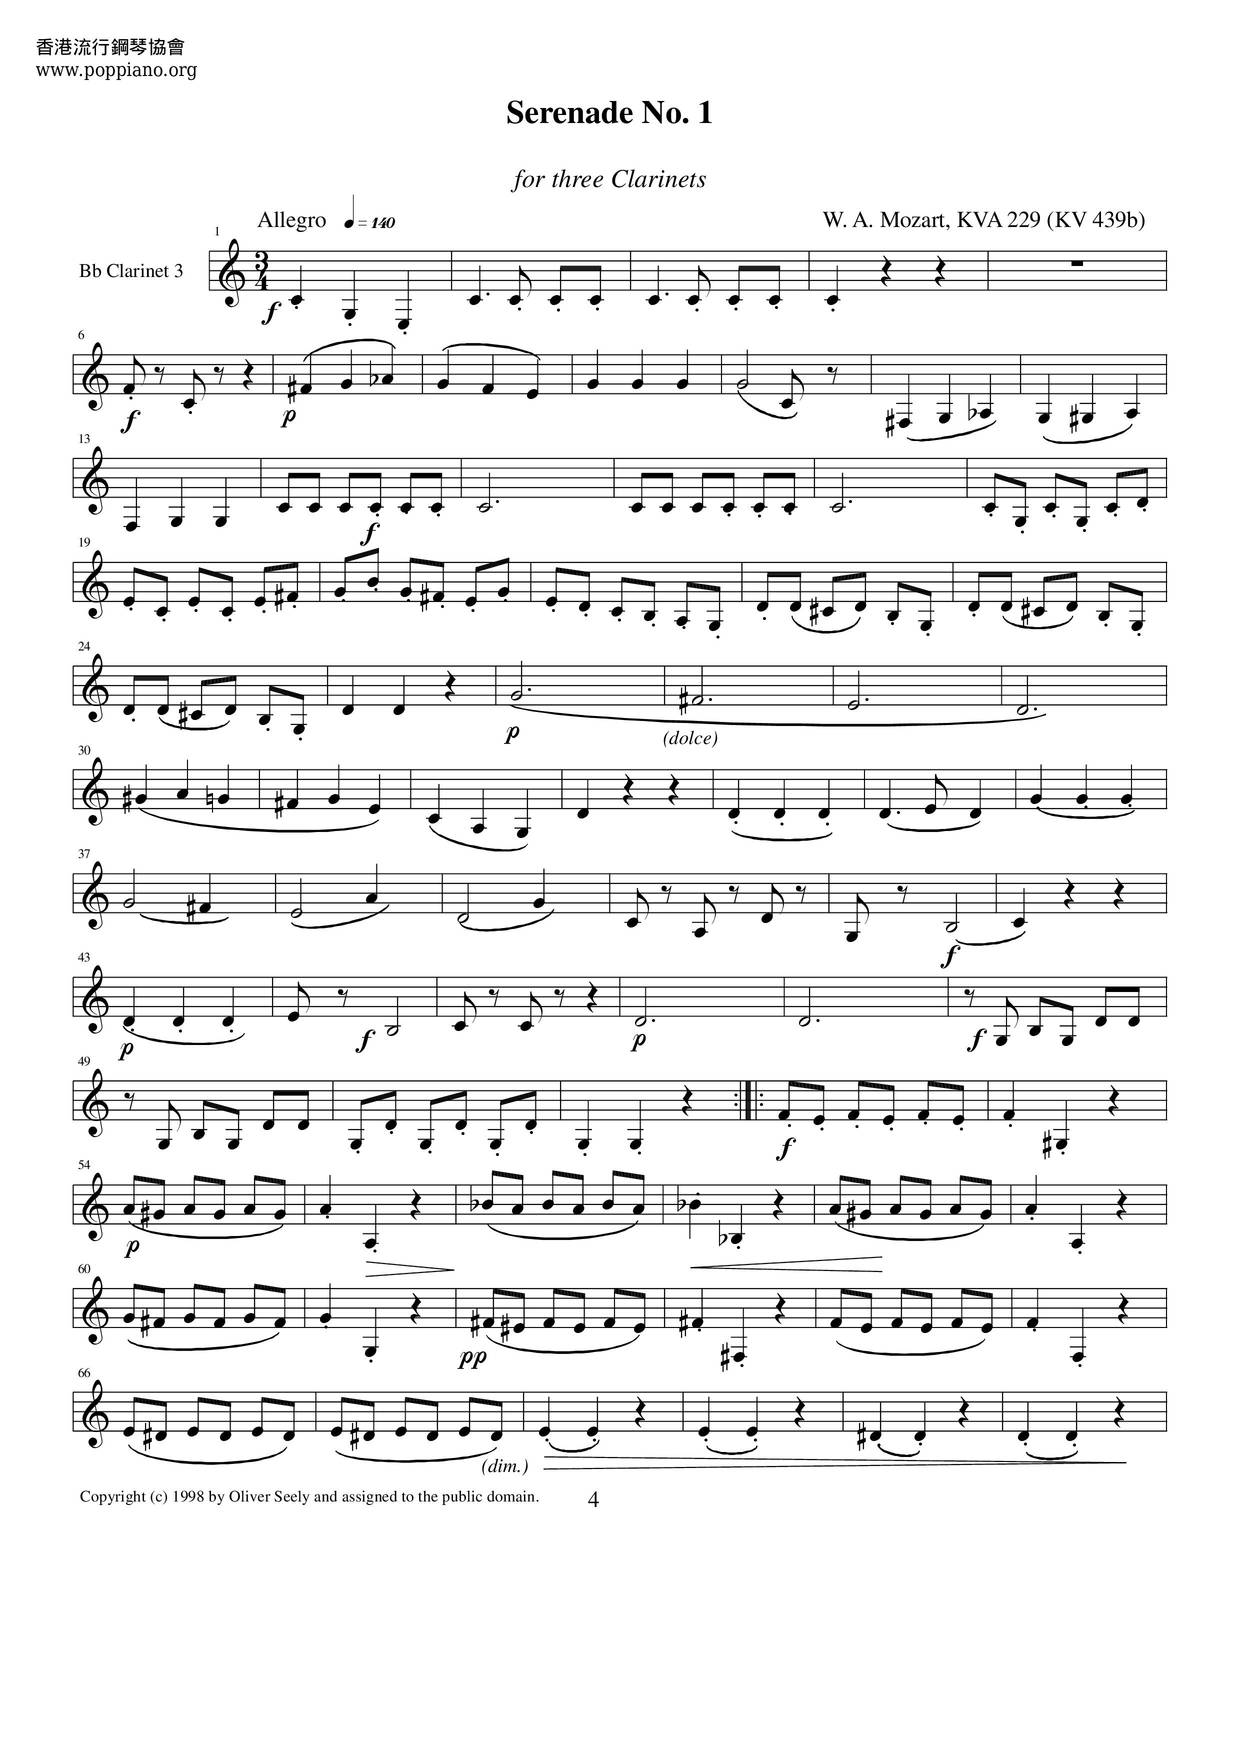 6 Serenades For 3 Clarinets Score